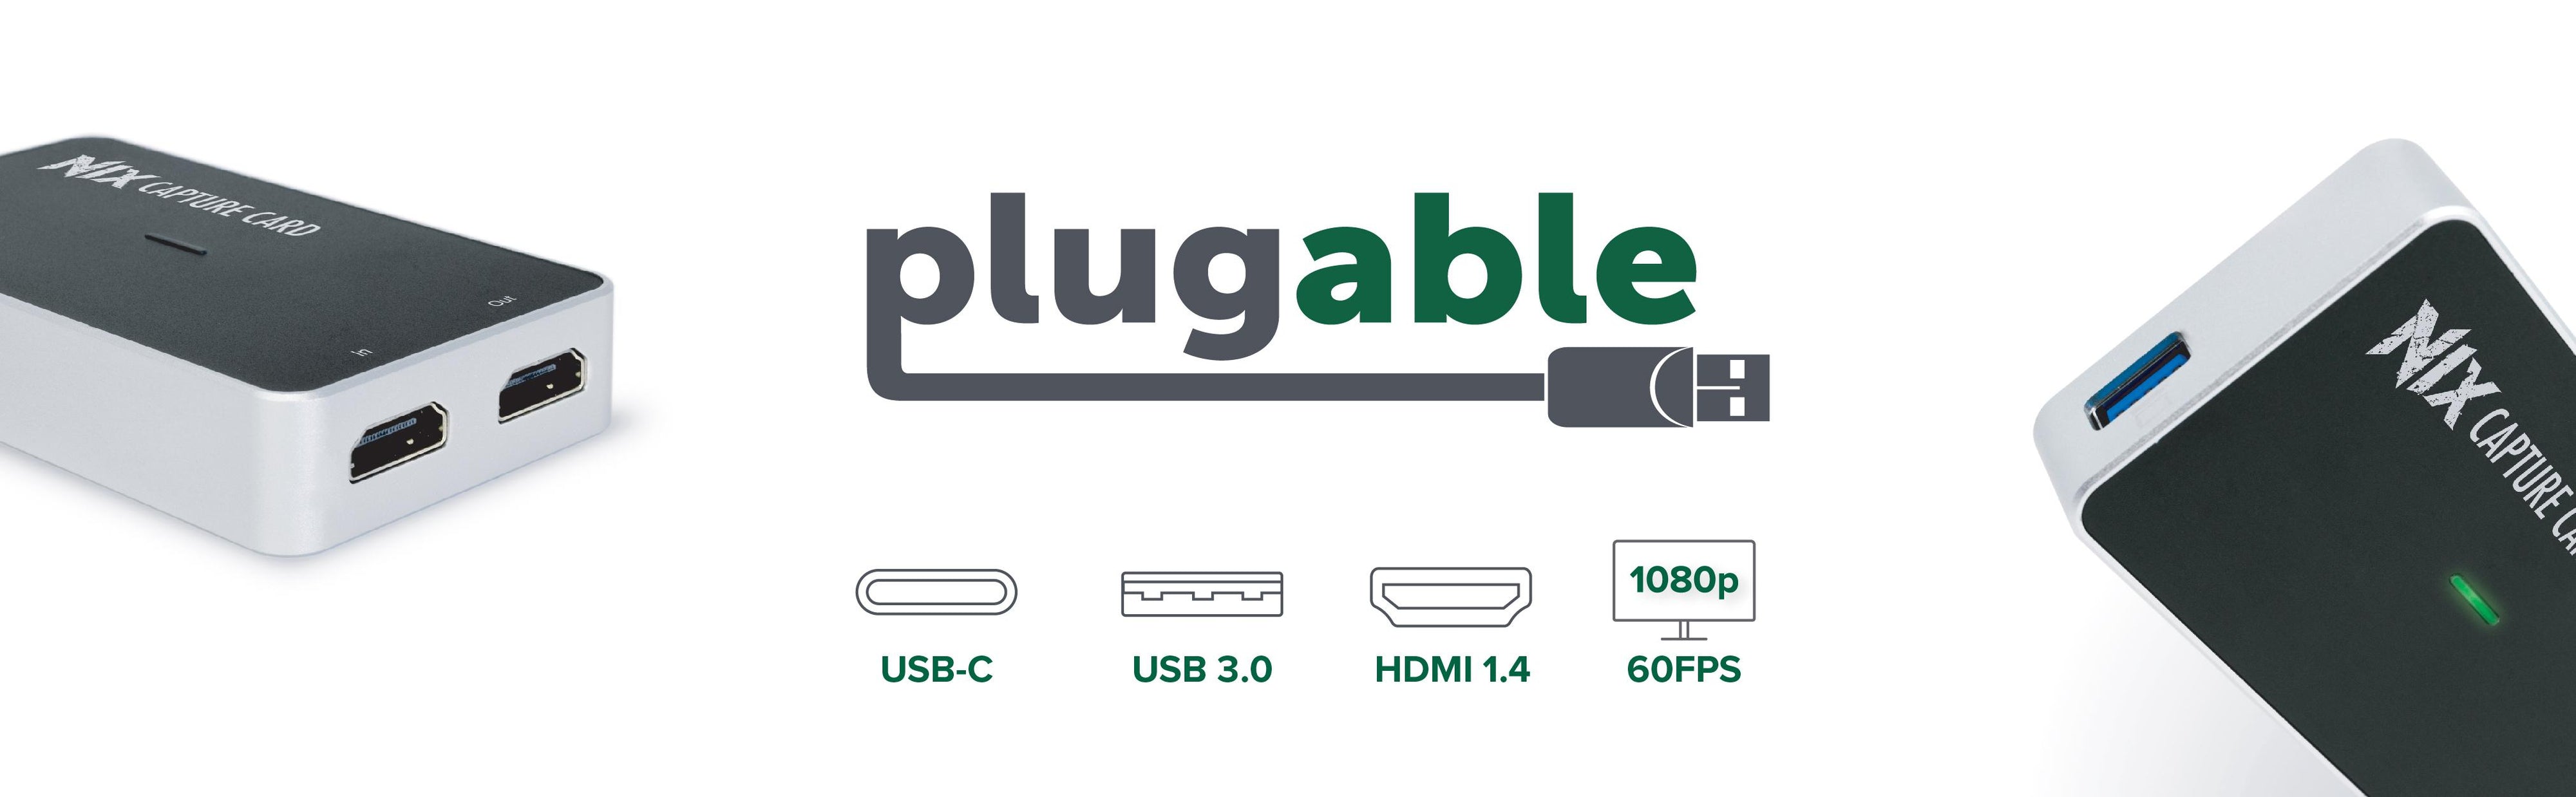 Plugable USBC-CAP60 and ports list